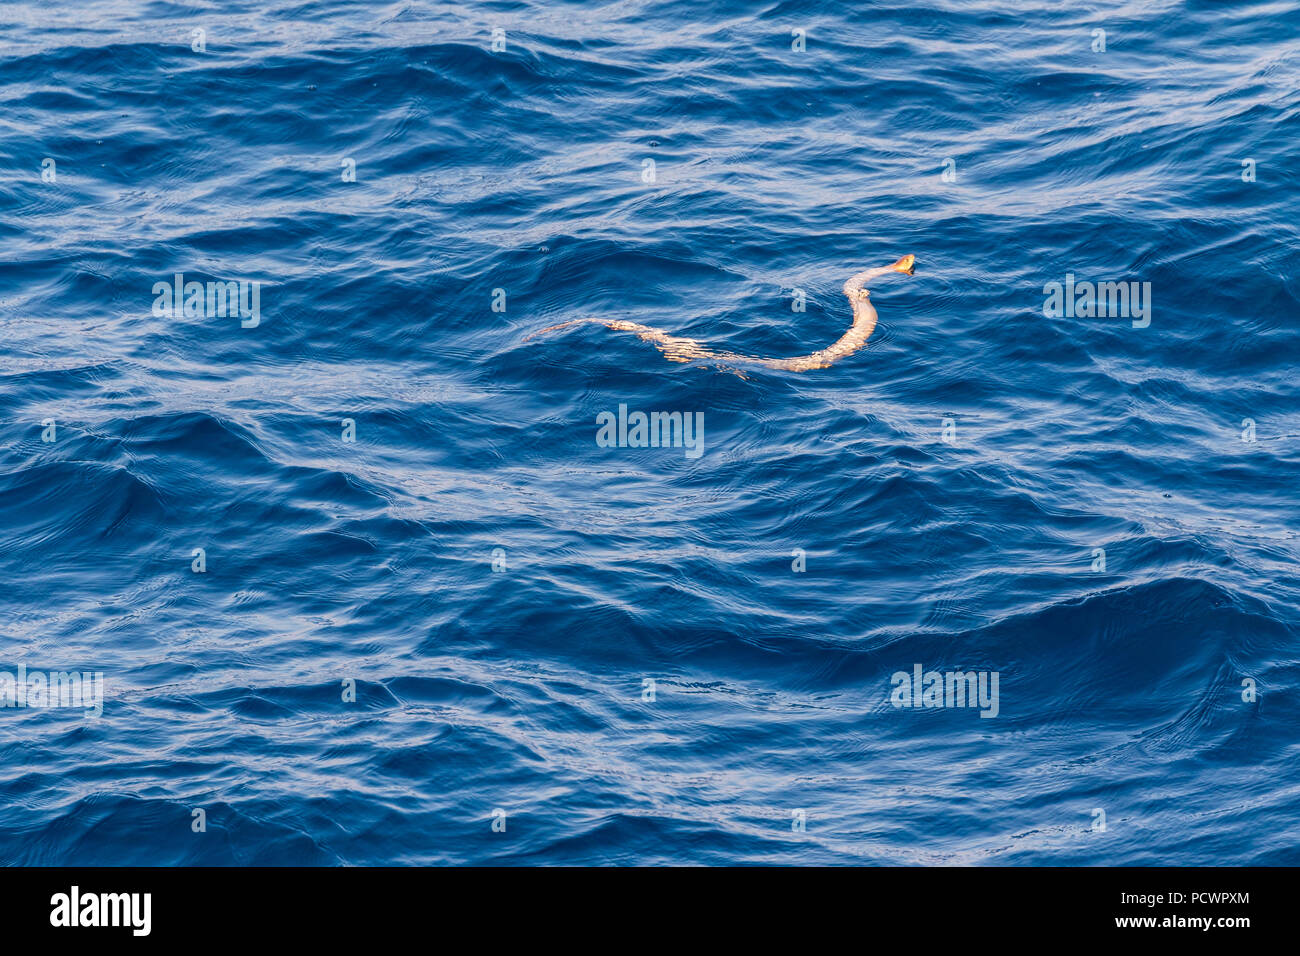 Stokes sea snake in the Timor Sea, off the coast of Western Australia Stock Photo